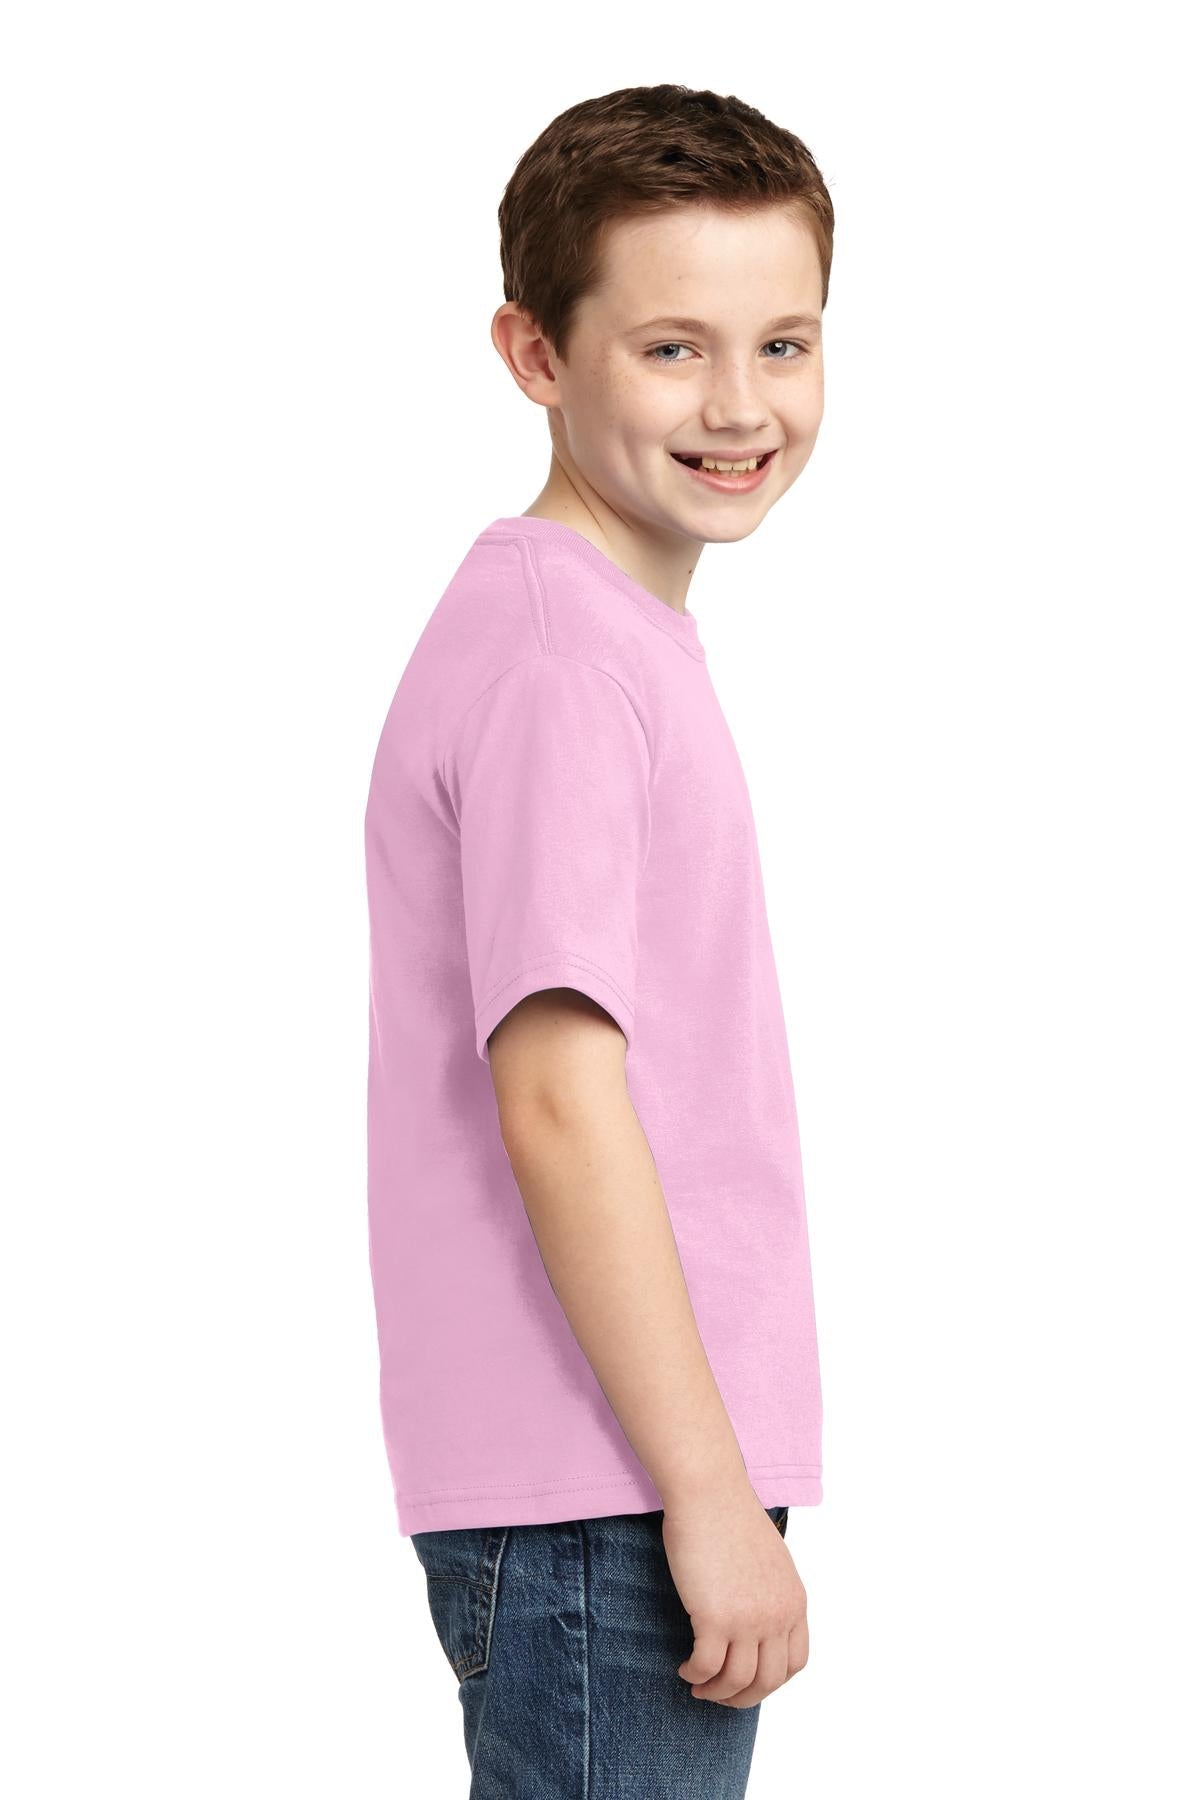 JERZEES® - Youth Dri-Power® 50/50 Cotton/Poly T-Shirt. 29B [Classic Pink] - DFW Impression